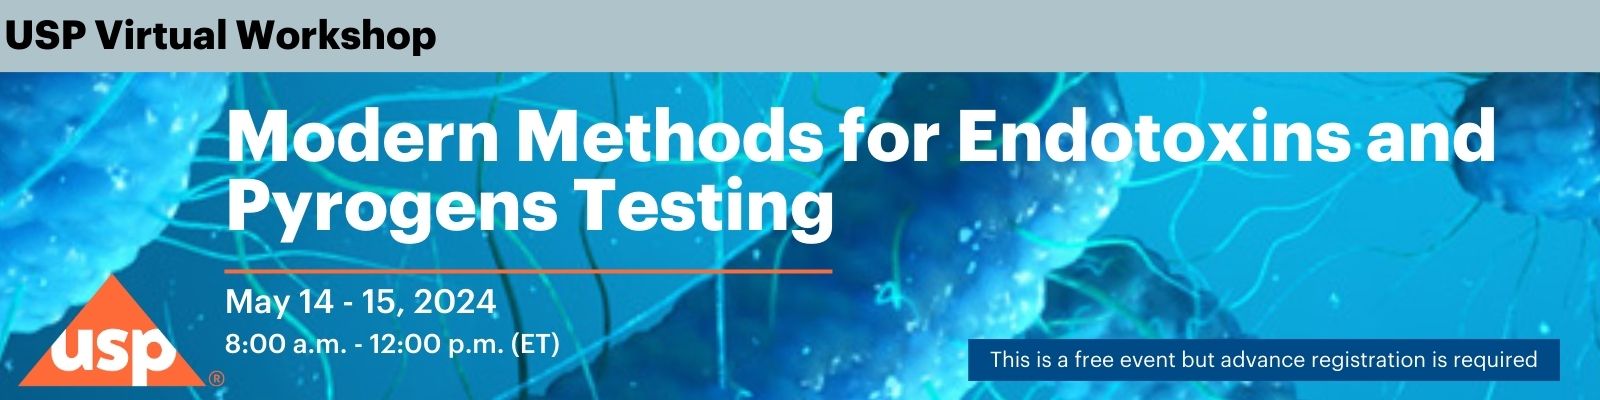 USP Modern Methods for Endotoxins and Pyrogens Testing Virtual Workshop 